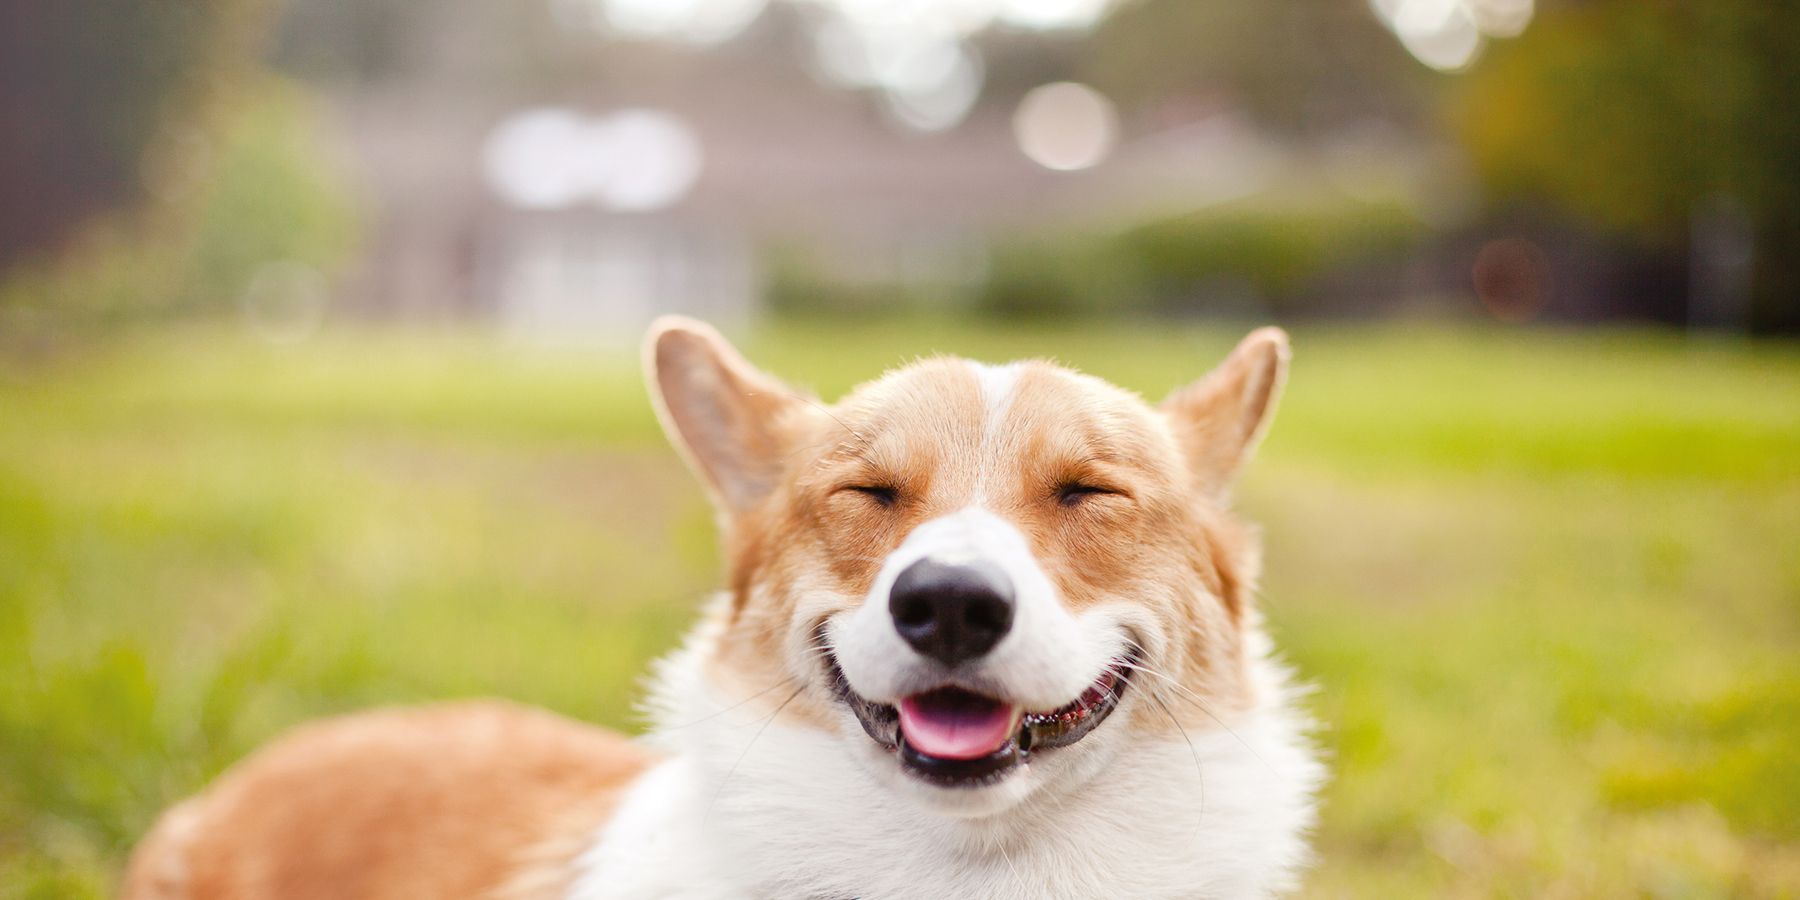 smiling animal images